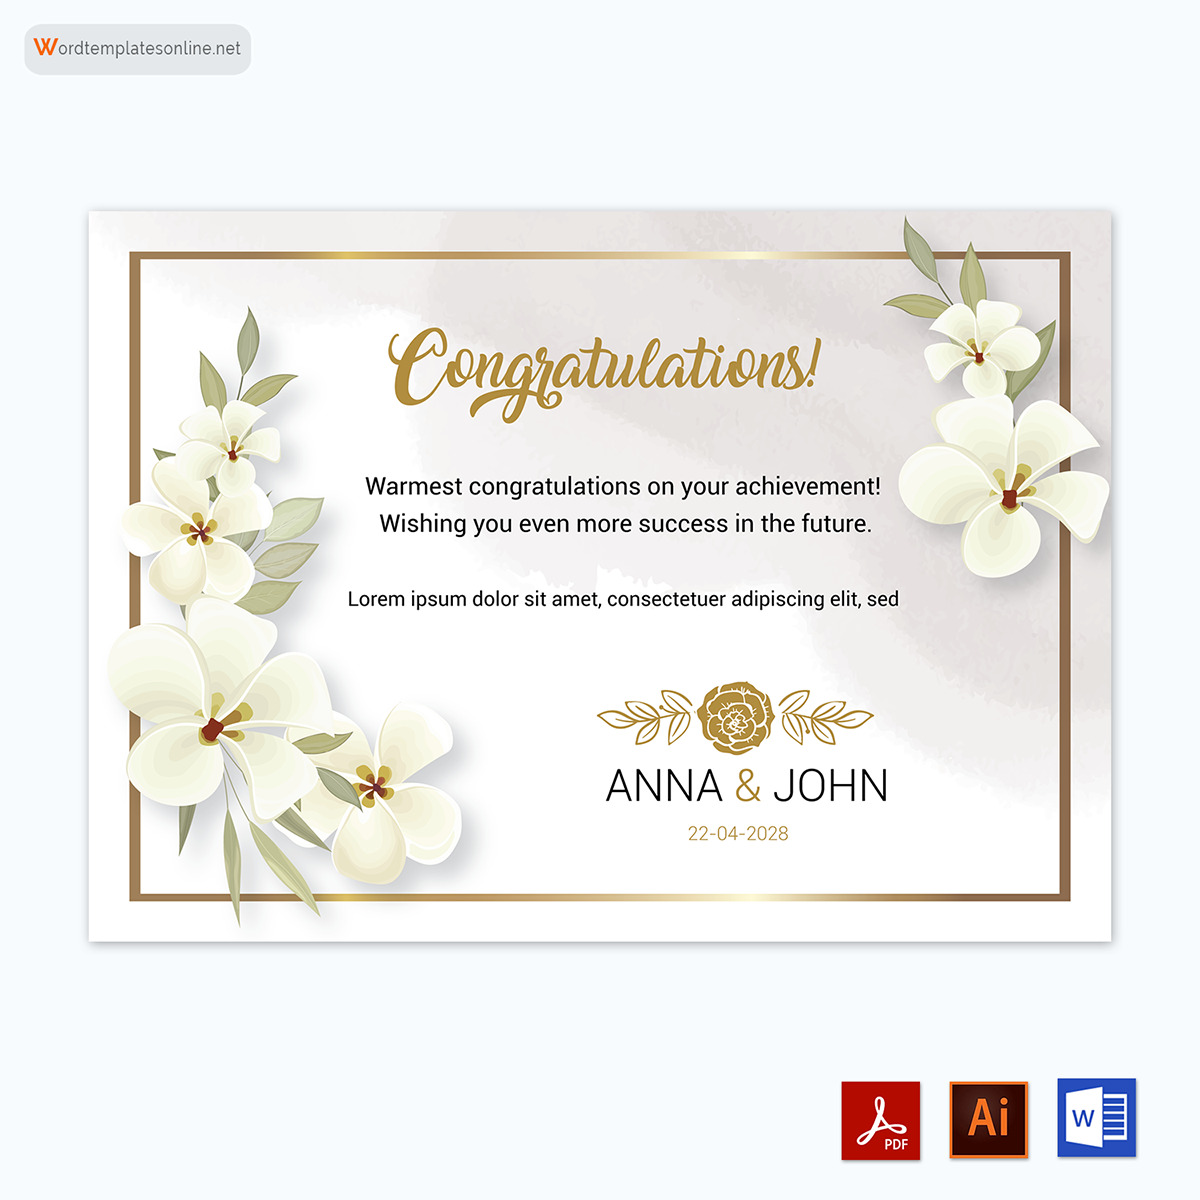 "Editable congratulations greeting card template"